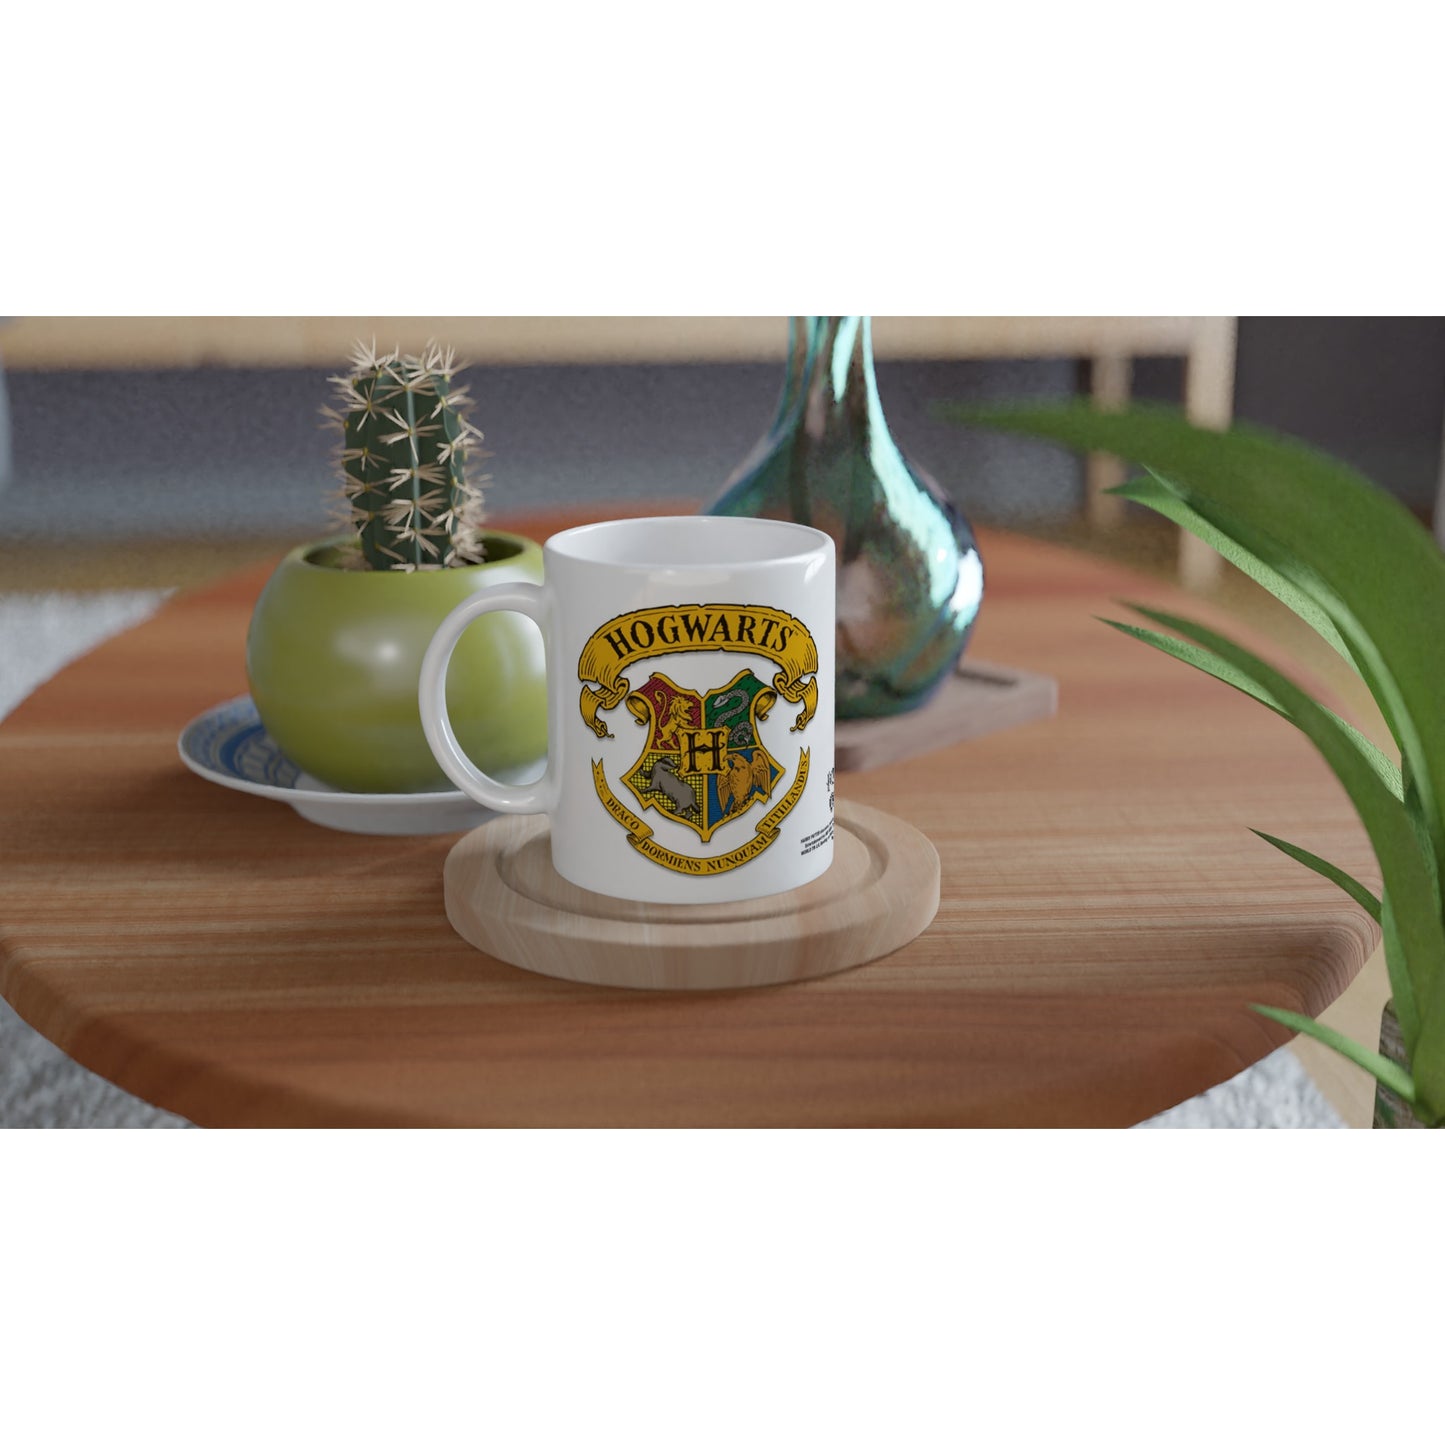 Official Harry Potter Mug - Hogwarts - 330ml White Mug